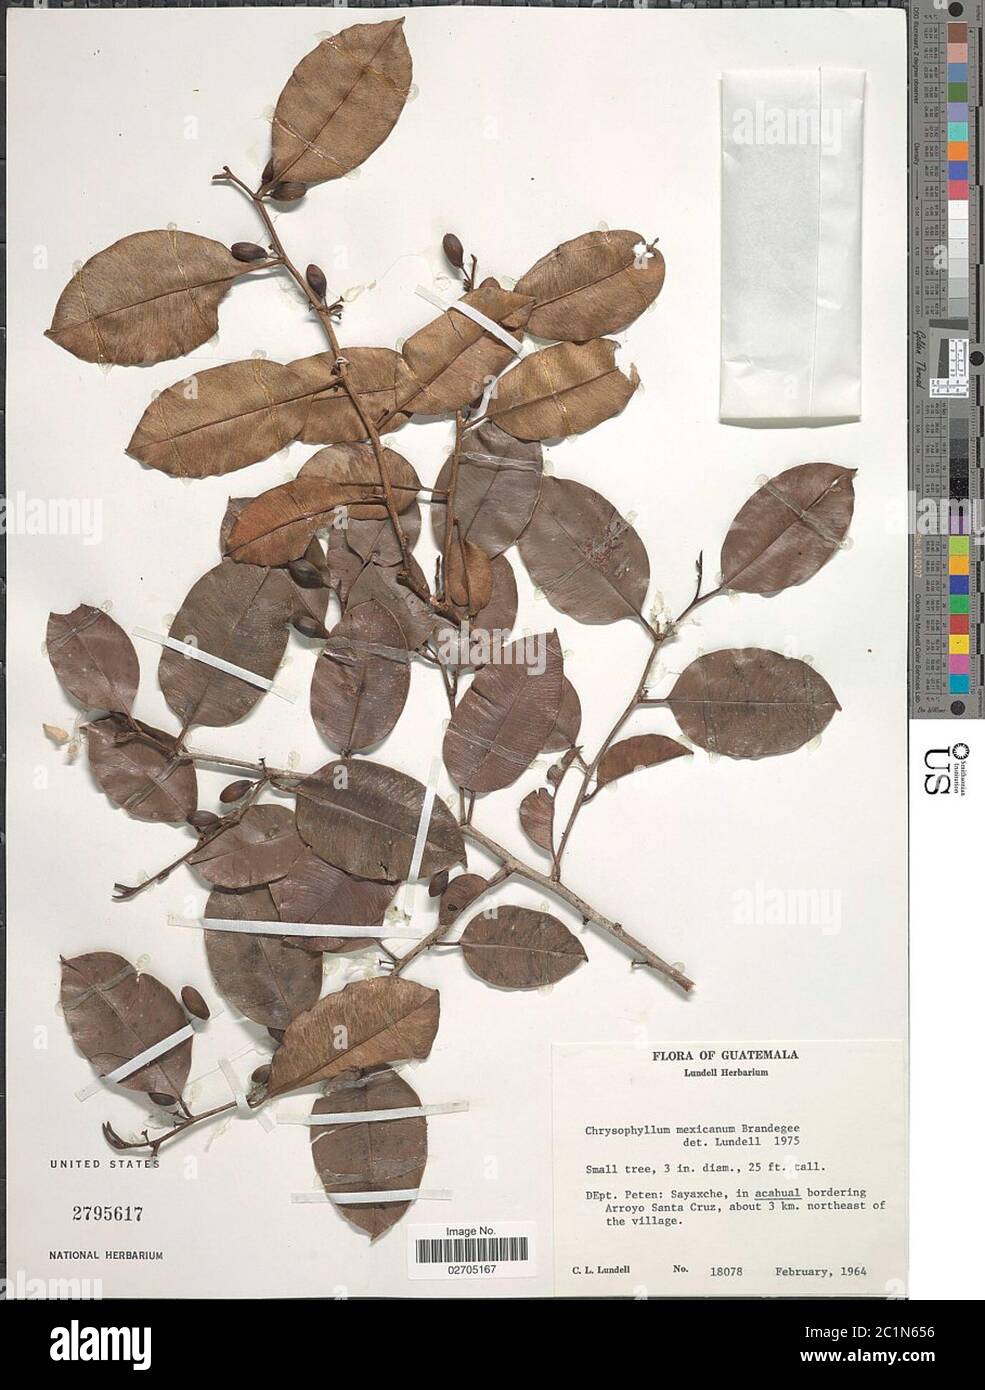 Chrysophyllum mexicanum Brandegee ex Standl Chrysophyllum mexicanum Brandegee ex Standl. Stock Photo